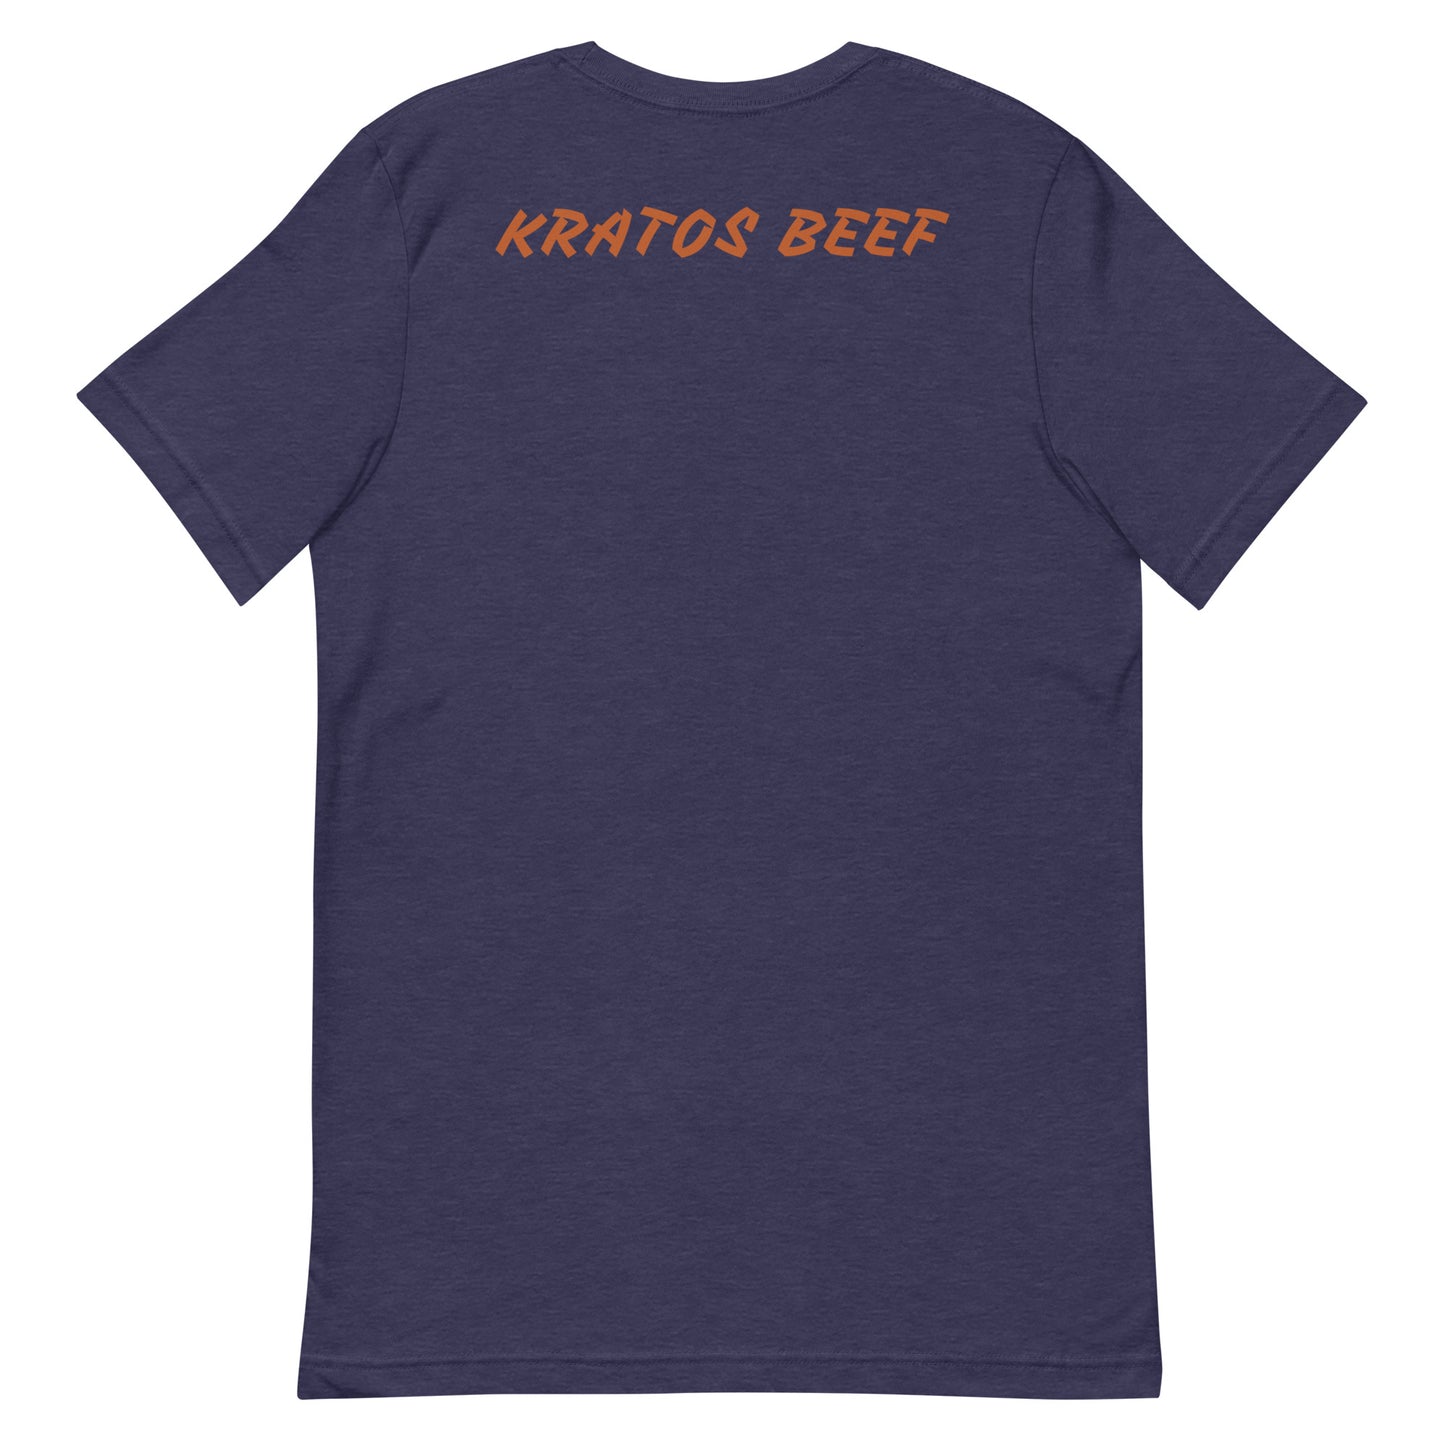 KRATOS BEEF Unisex T-shirt